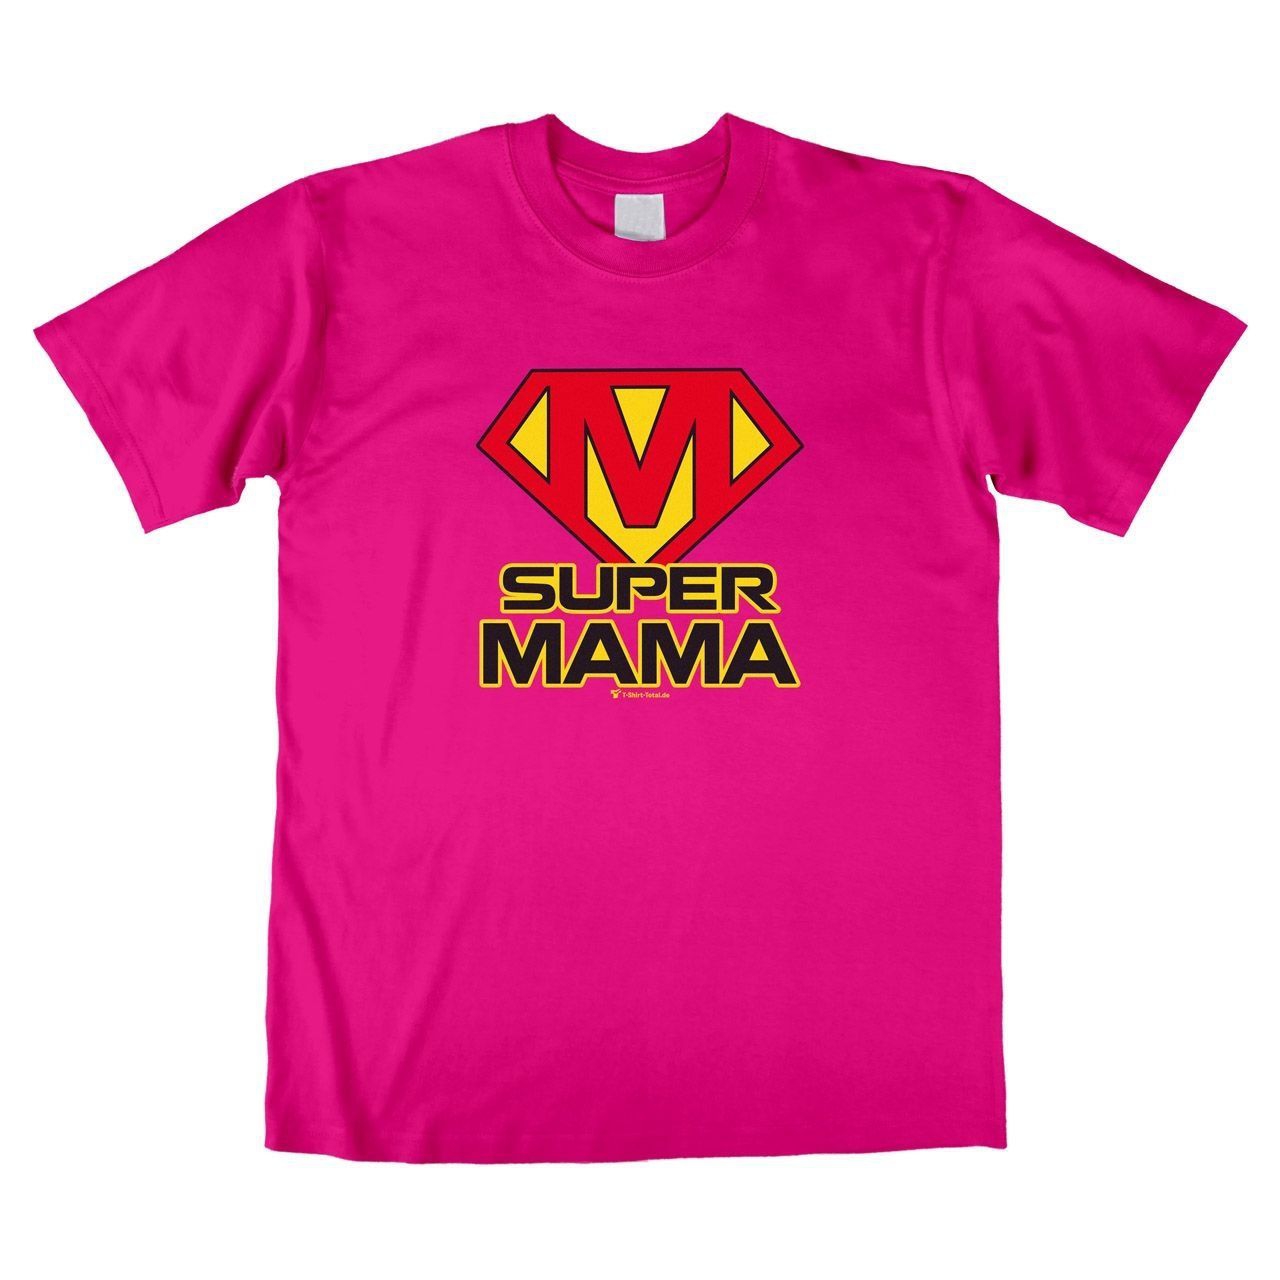 Super Mama Unisex T-Shirt pink Small